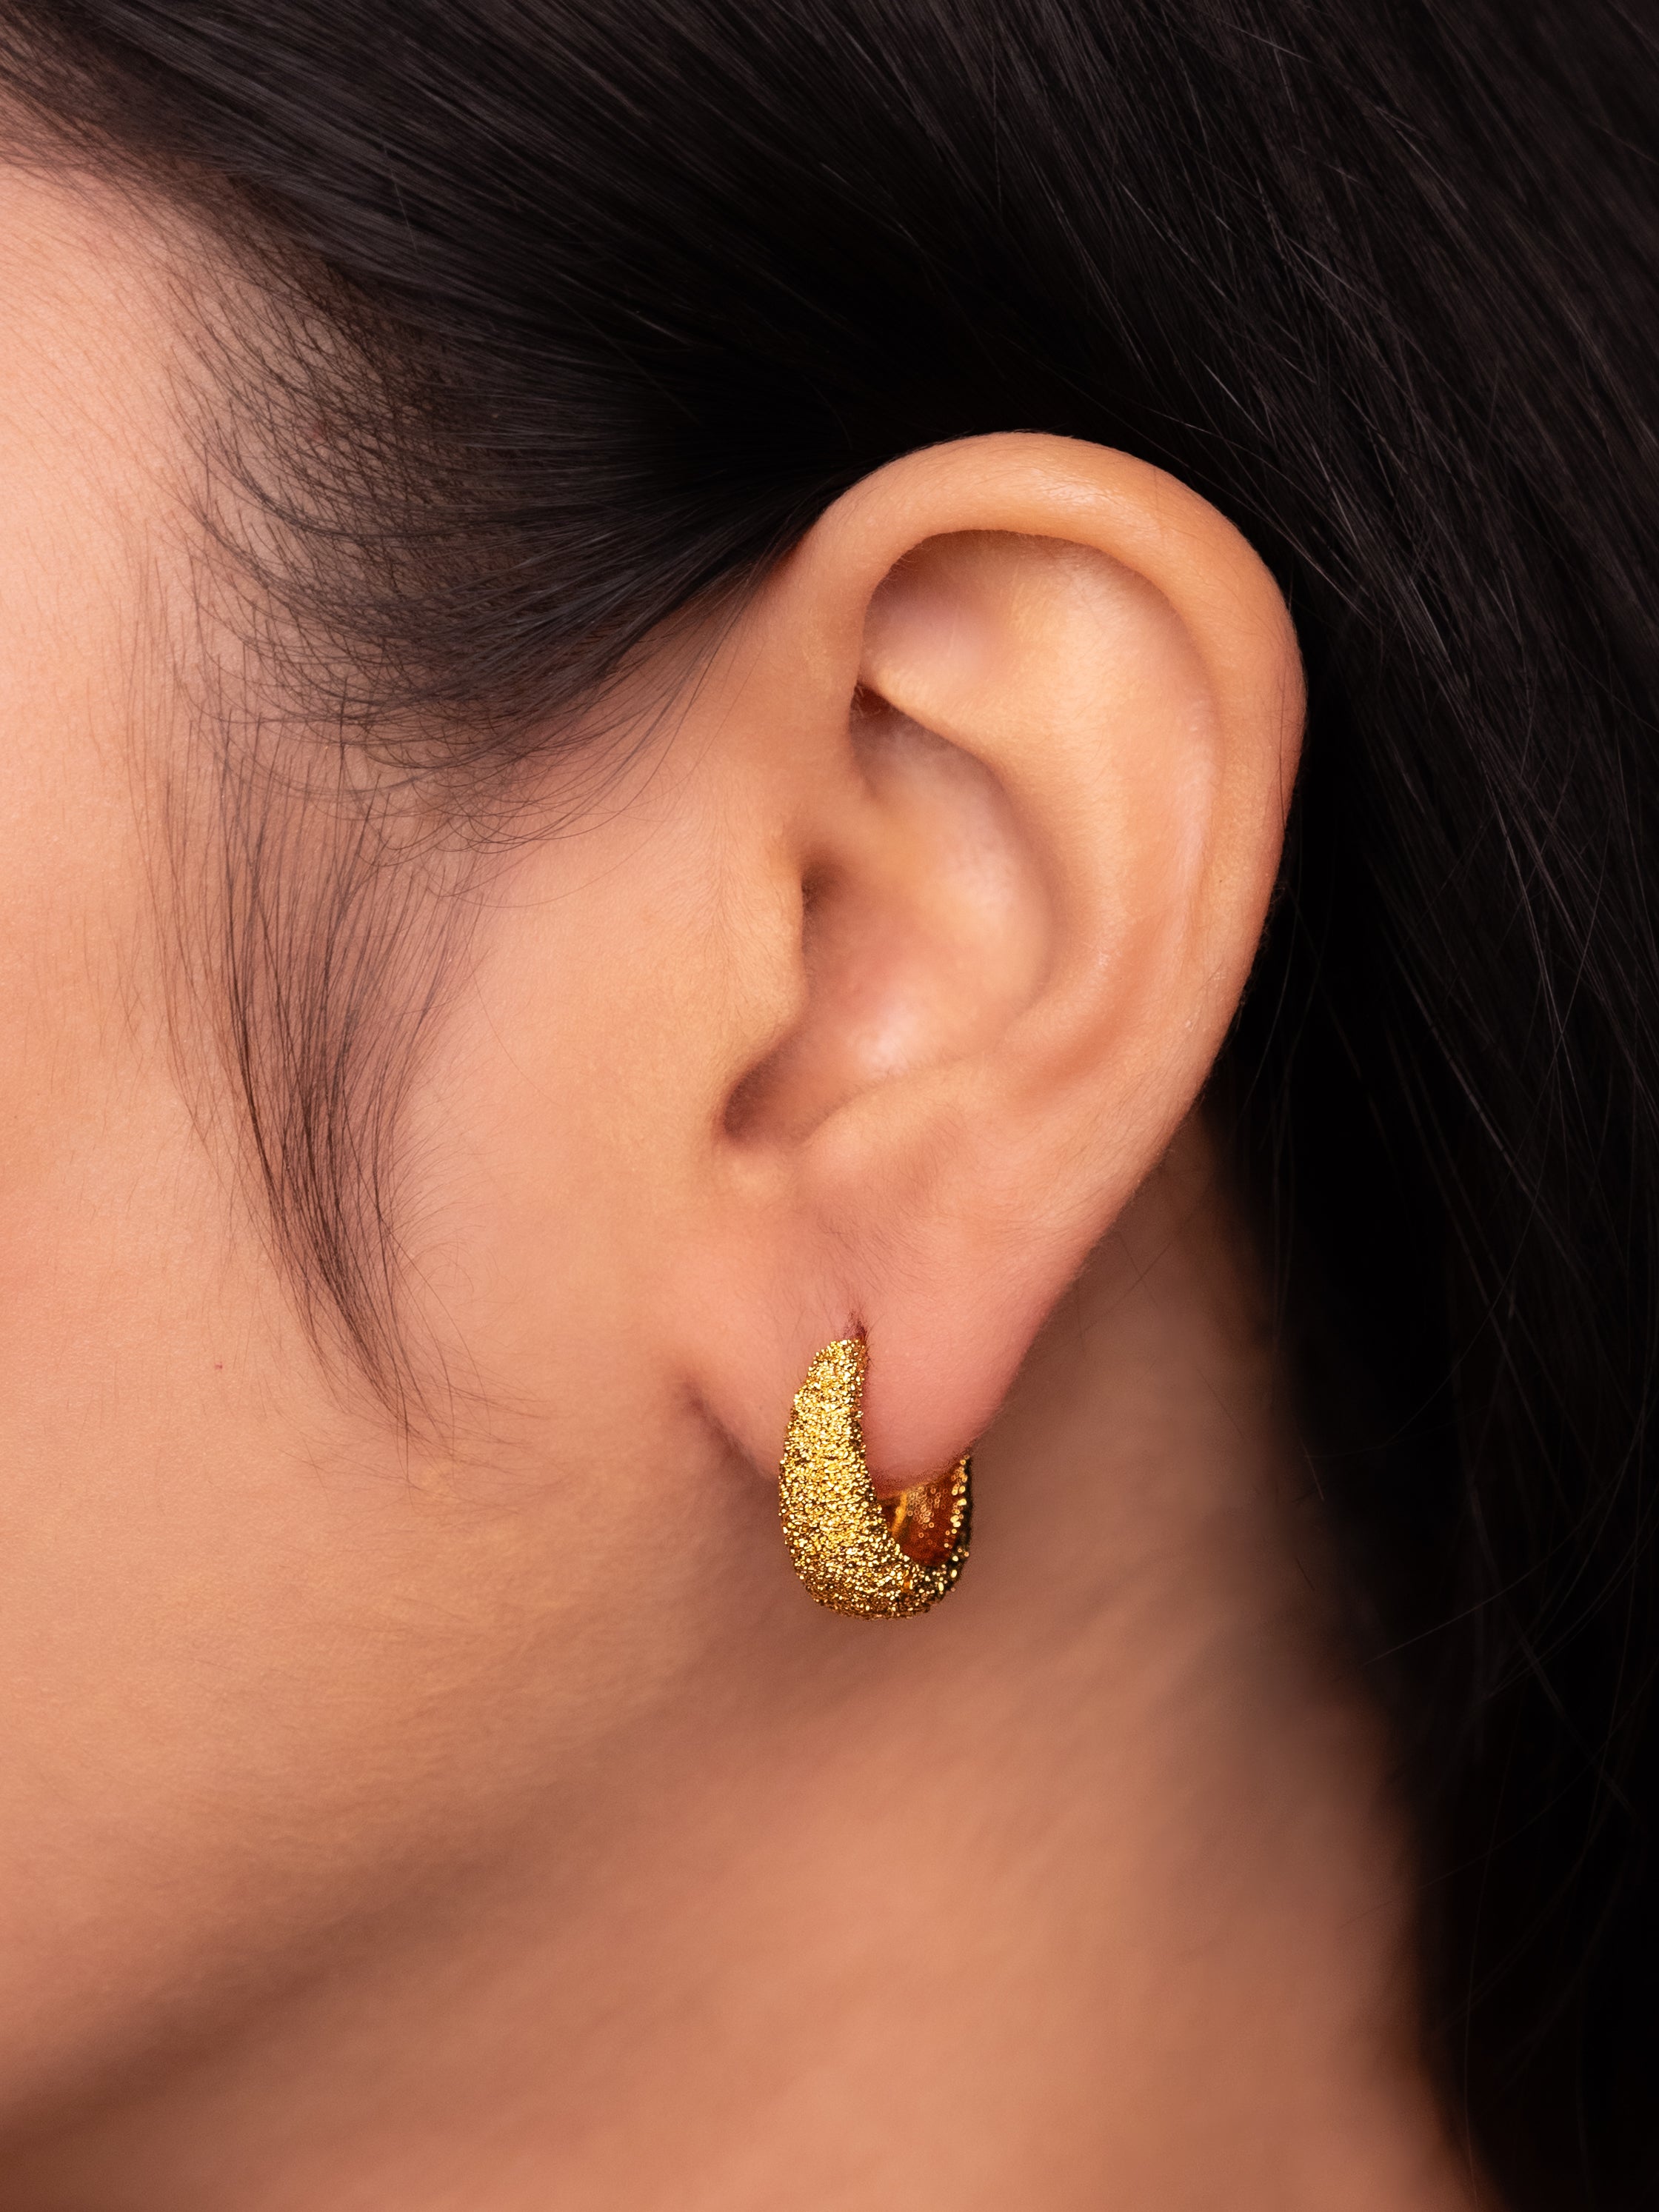 Textured Half Hoops Earrings | 18k Gold Plated